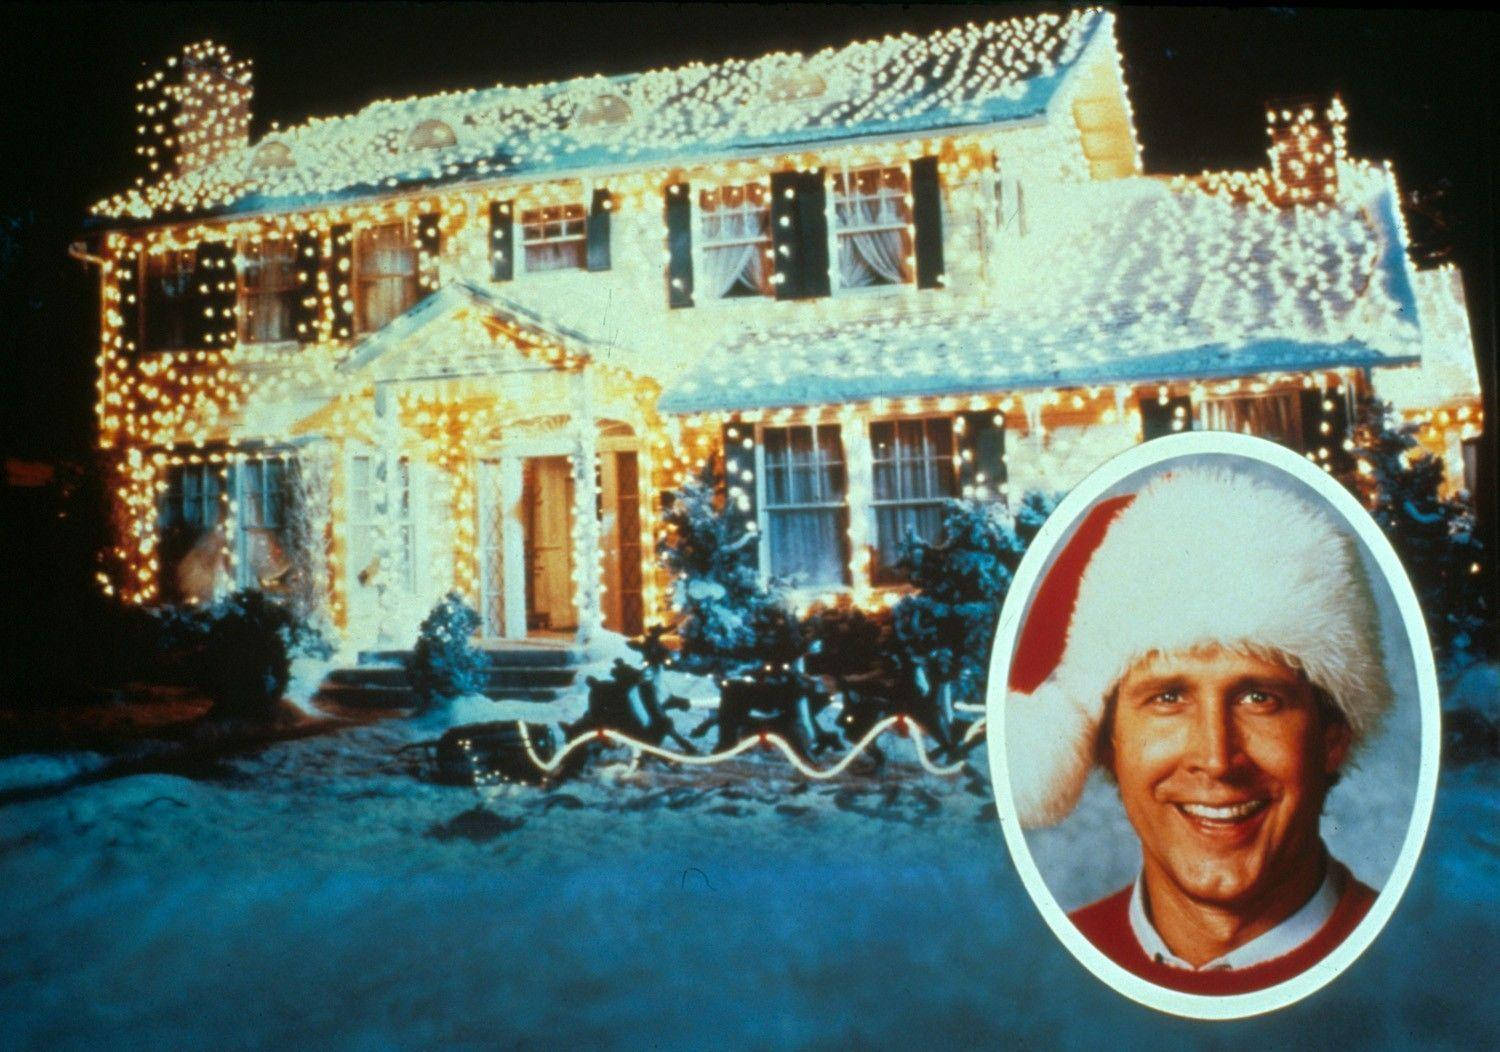 En mand iført julehue står foran et hus med lys. Wallpaper